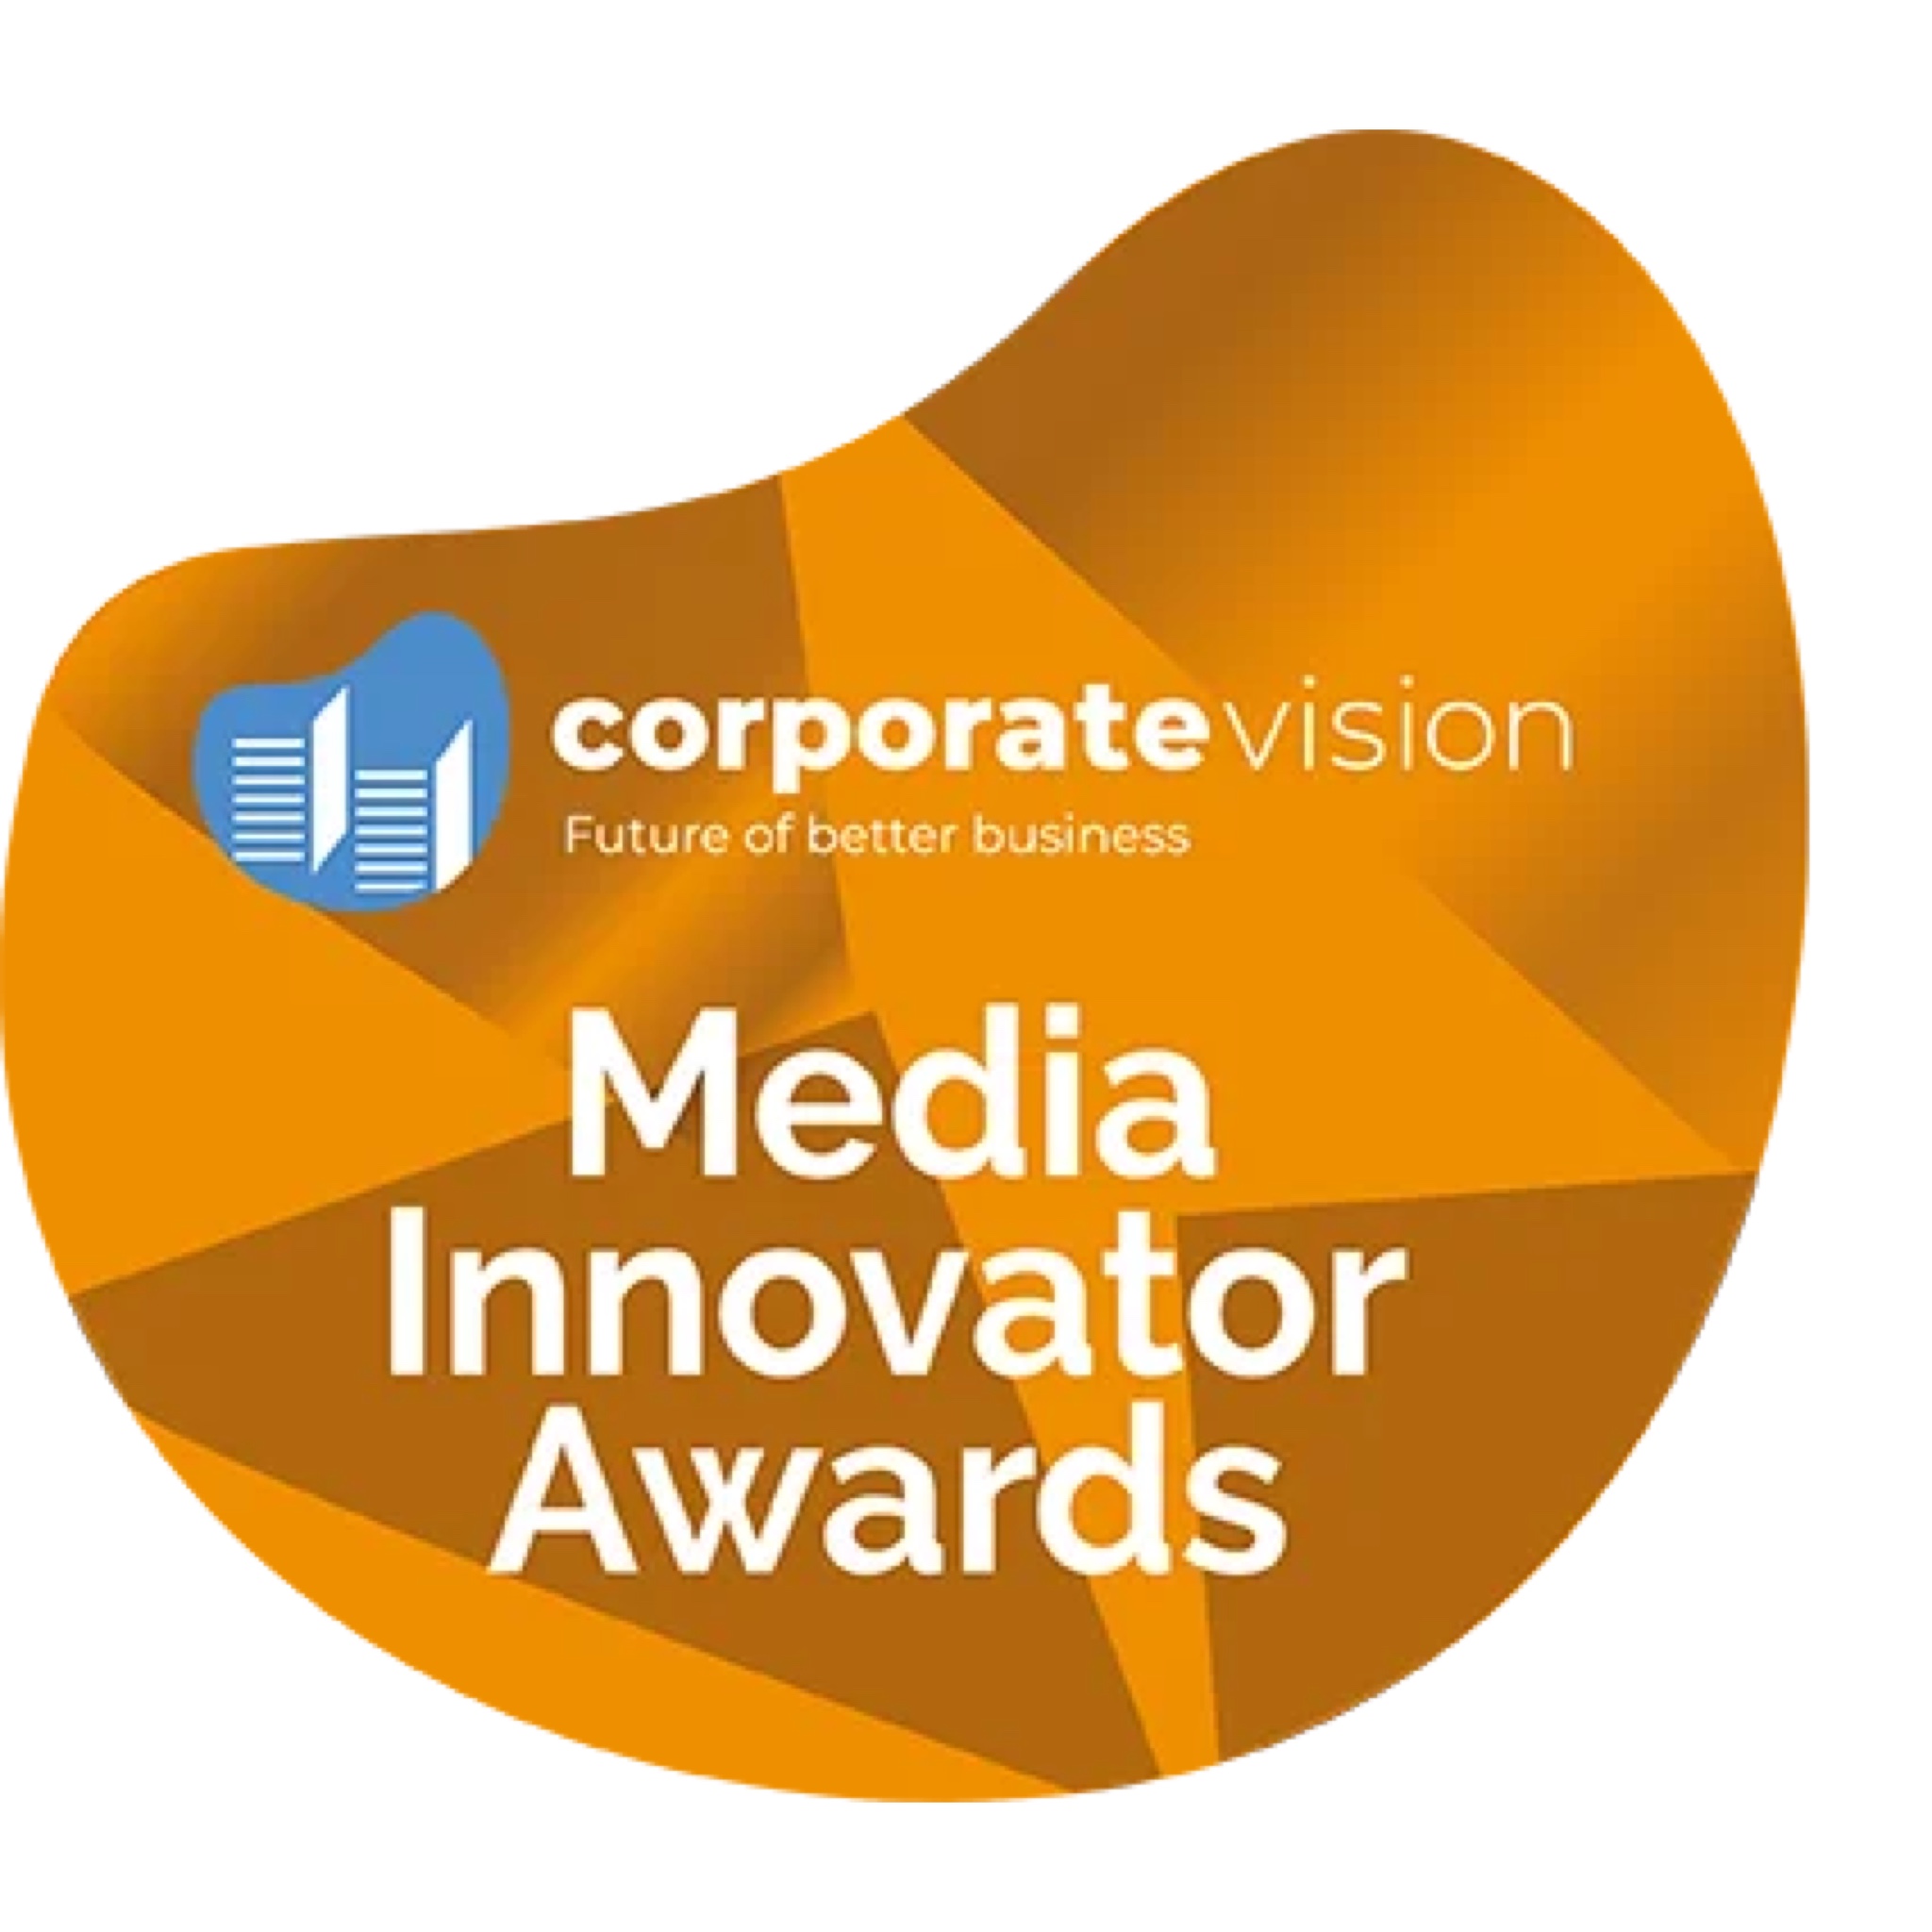 United StatesのエージェンシーAltered State ProductionsはMedia Innovator Awards - Corporate Vision賞を獲得しています